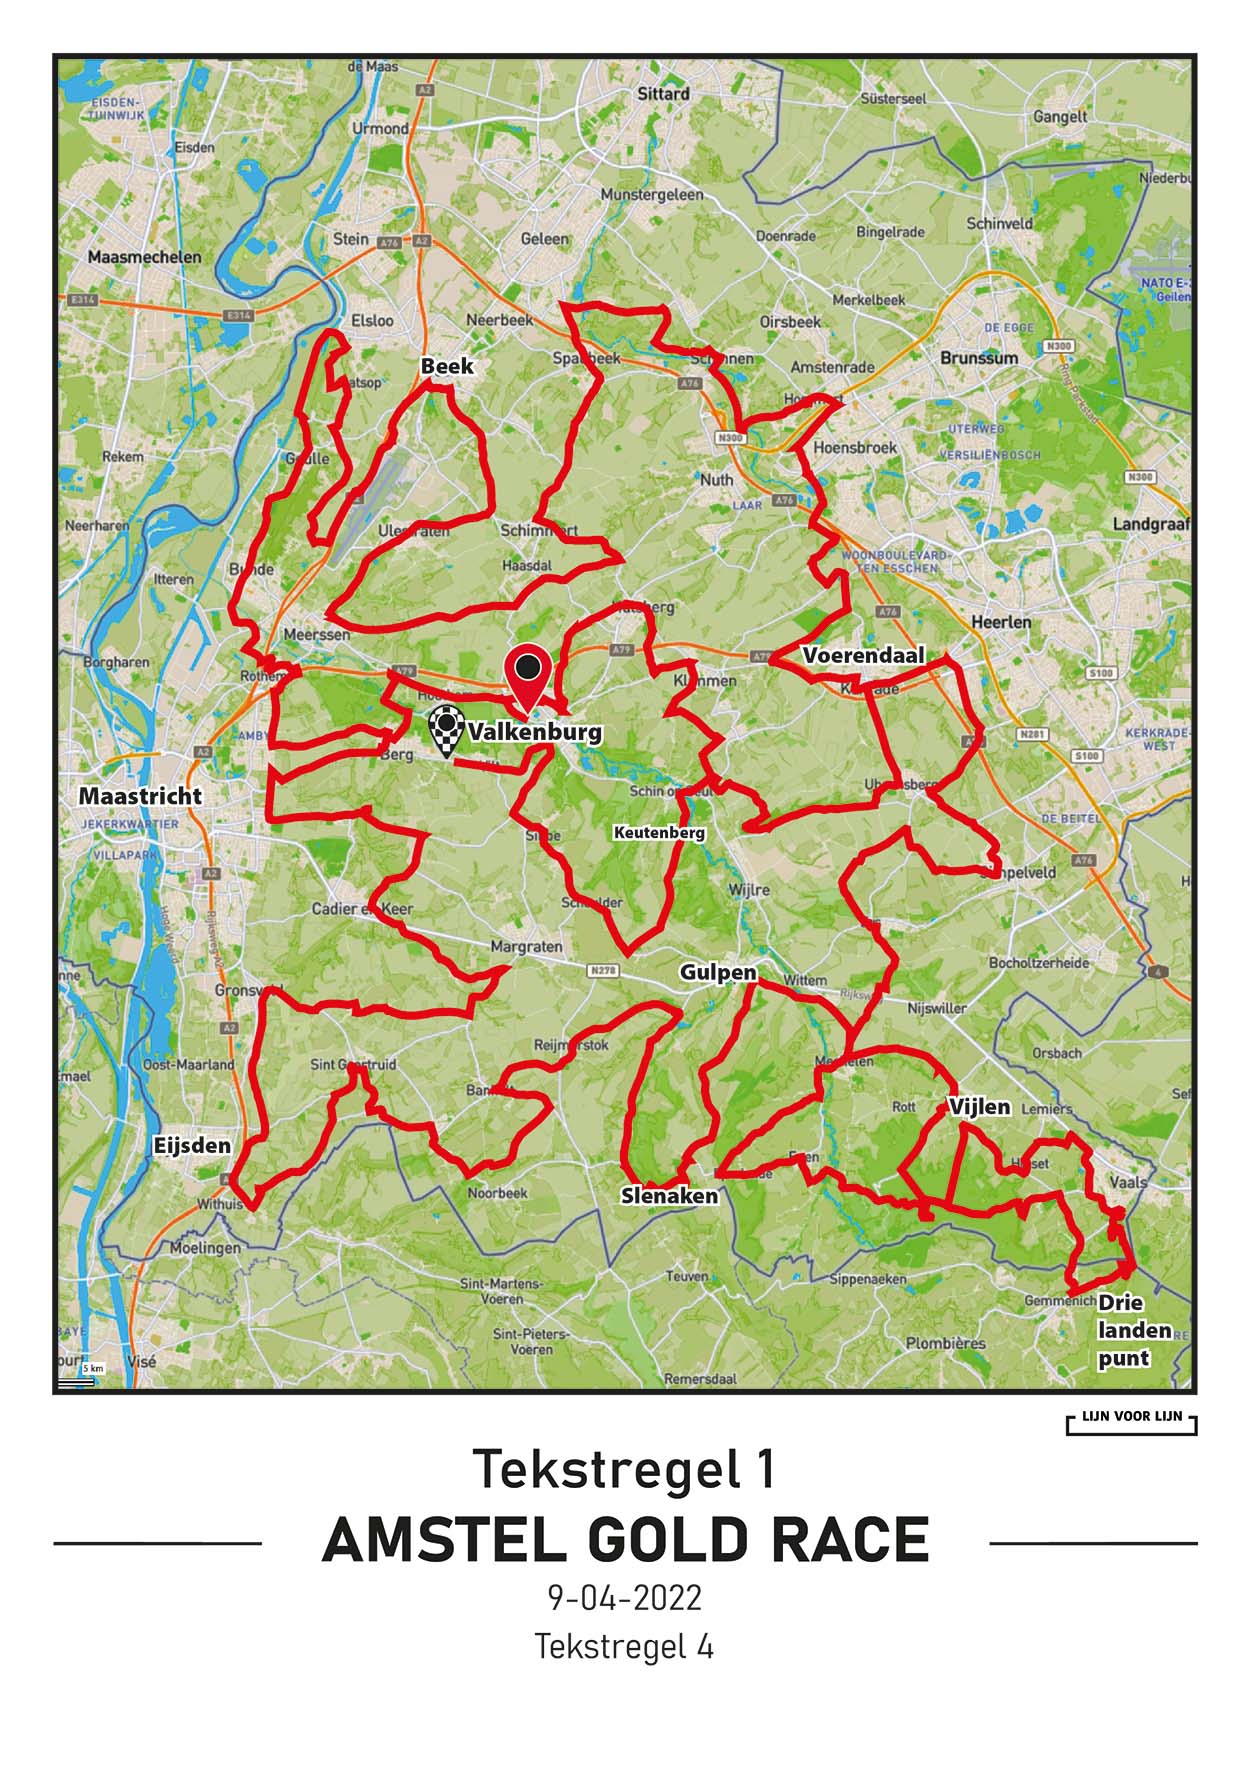 Amstel Gold Race 240km, 2022